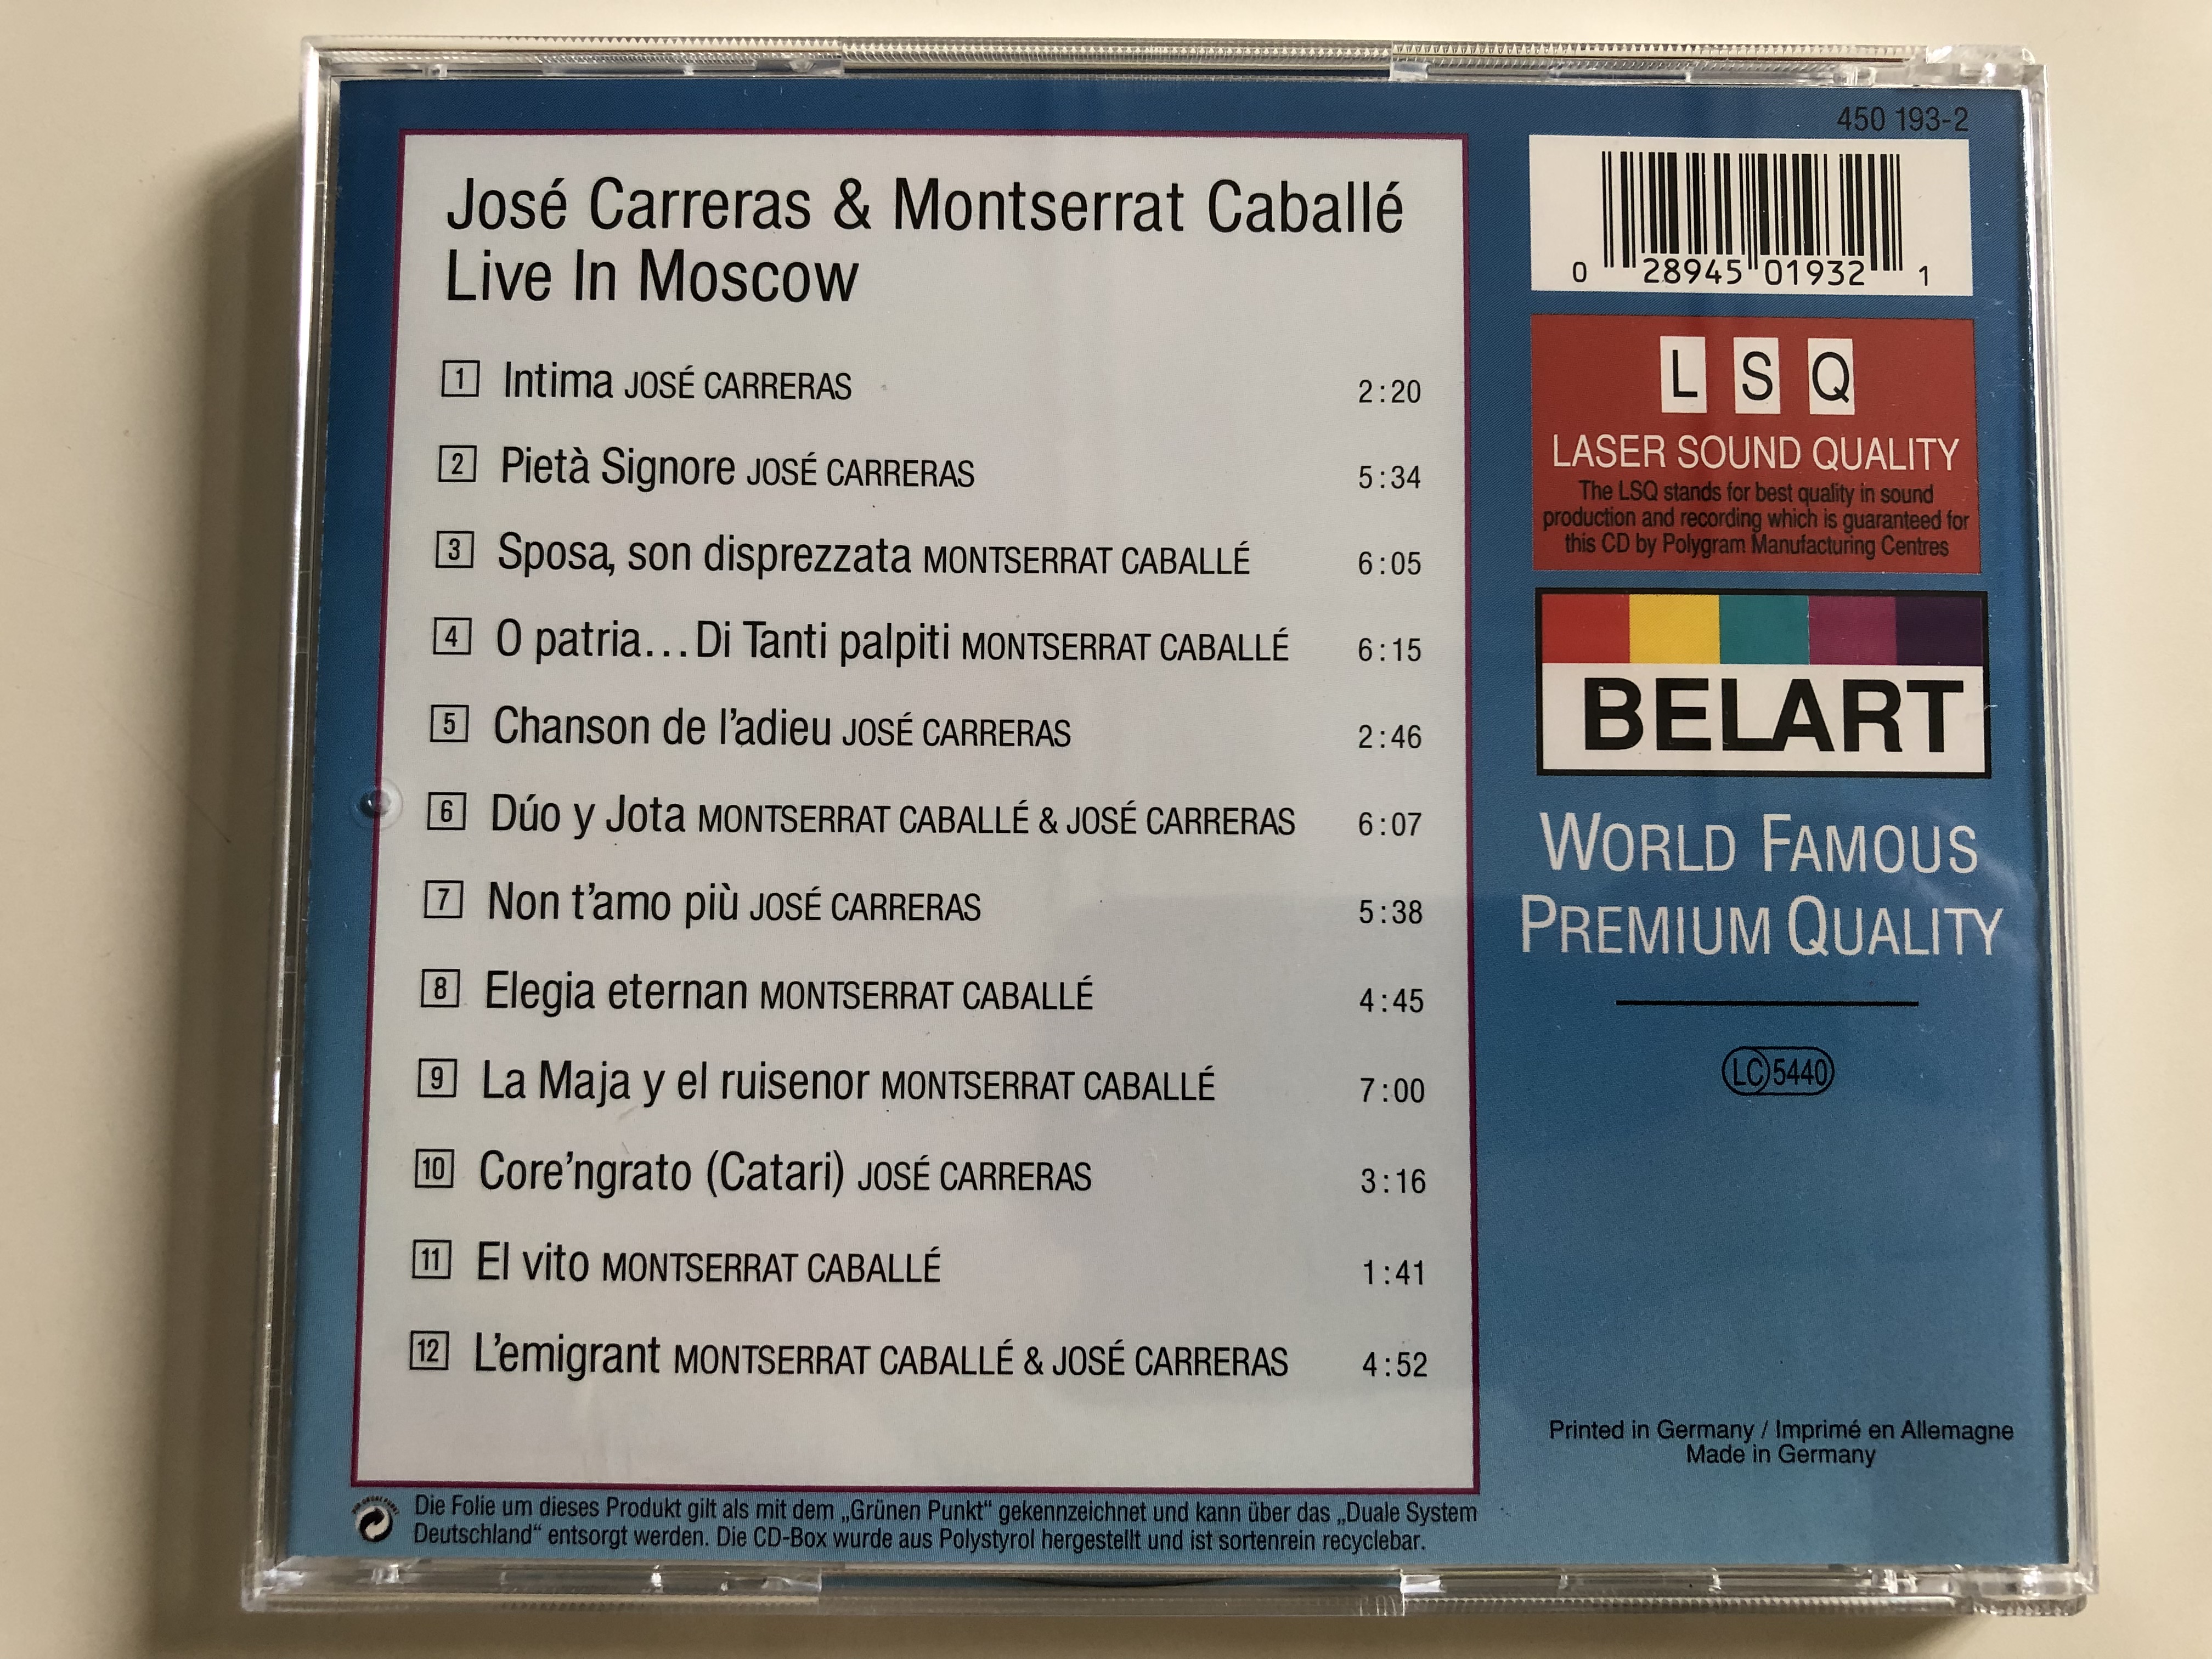 jos-carreras-montserrat-caball-live-in-moscow-belart-450-193-2-audio-cd-4-.jpg